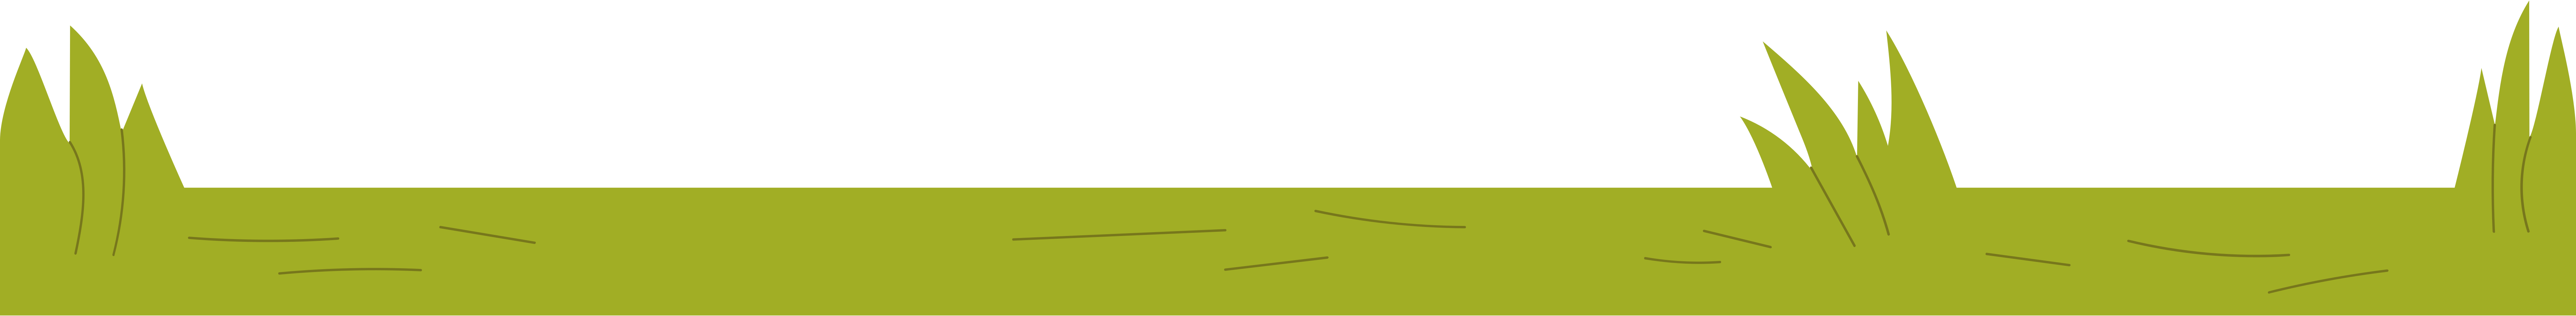 background grass Illustration in PNG, SVG